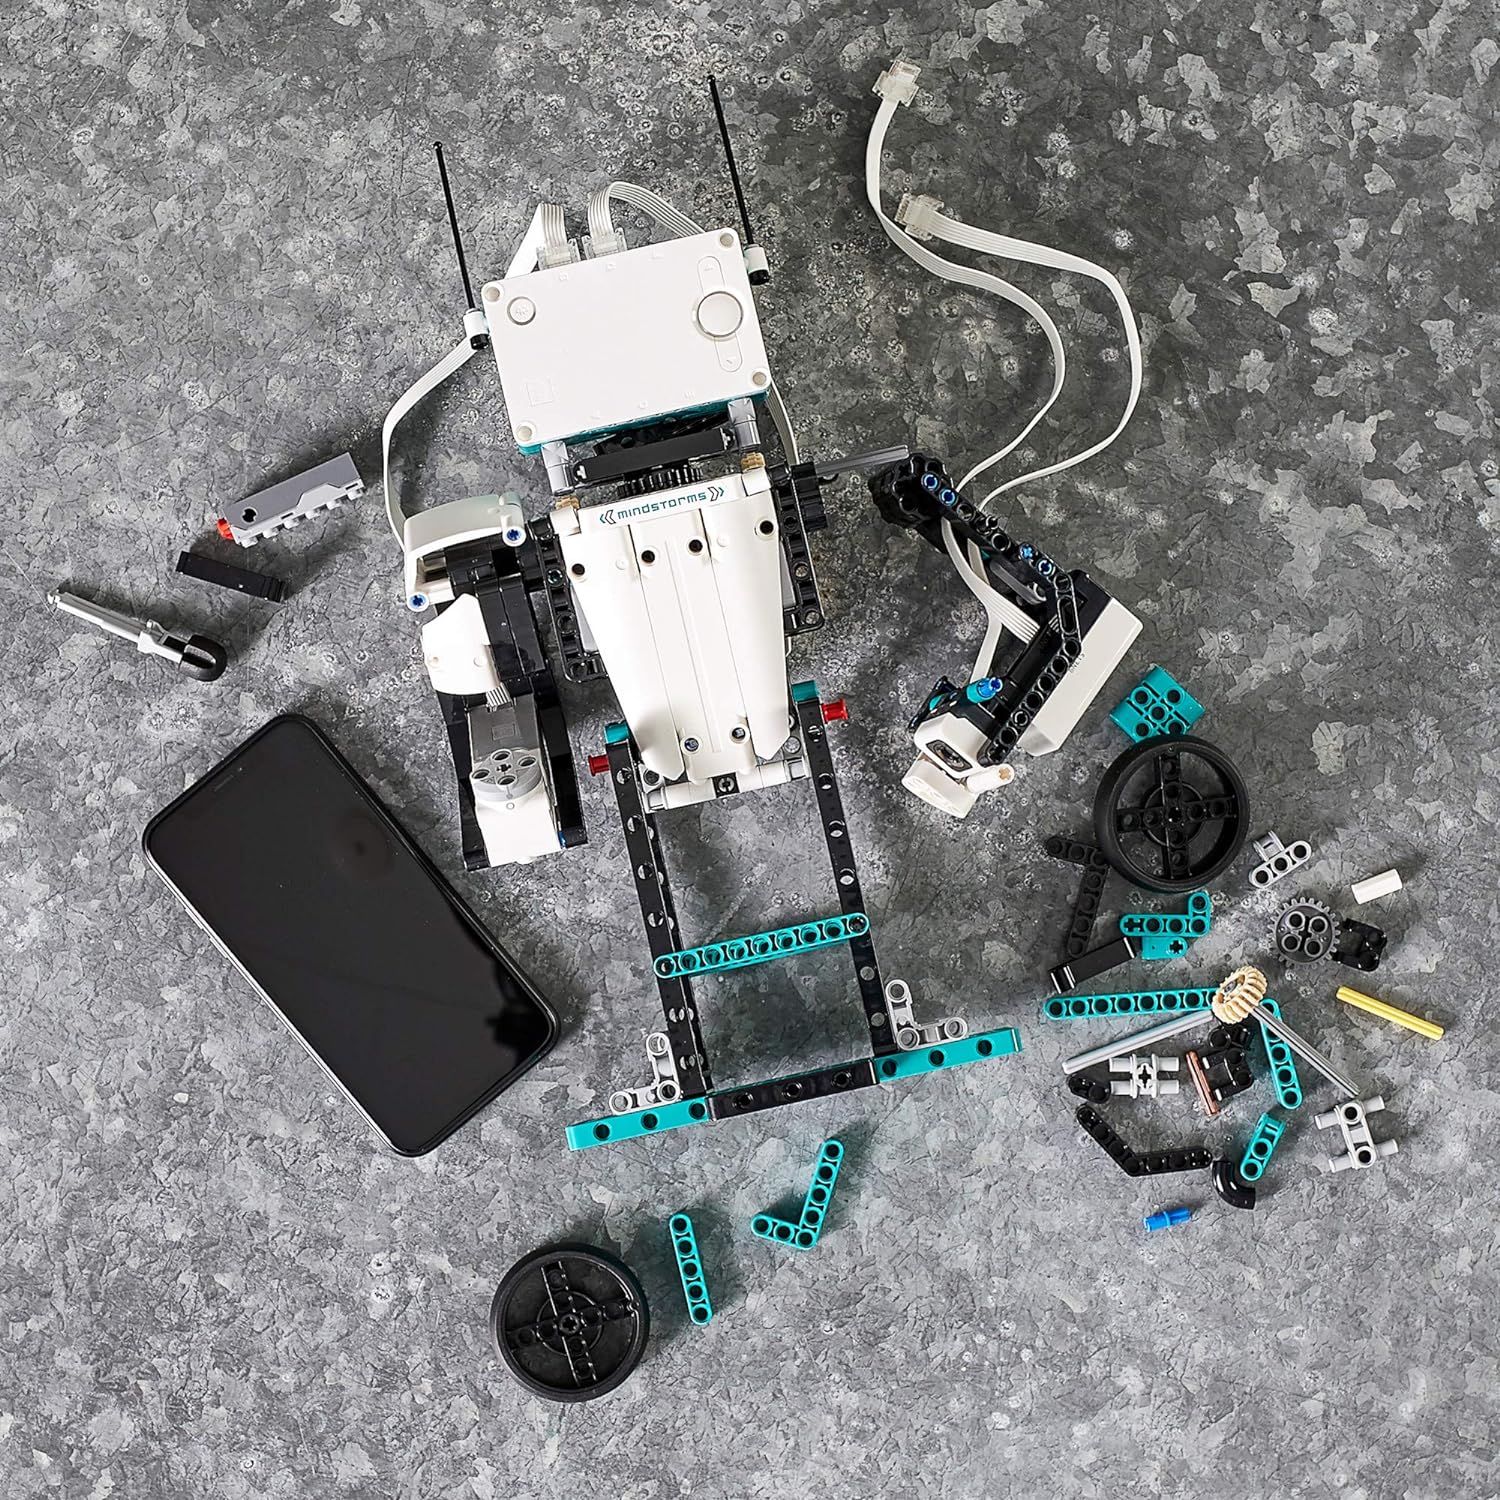 LEGO MINDSTORMS Robot Inventor Building Set: Unleash Your Child's Creativity and STEM Skills